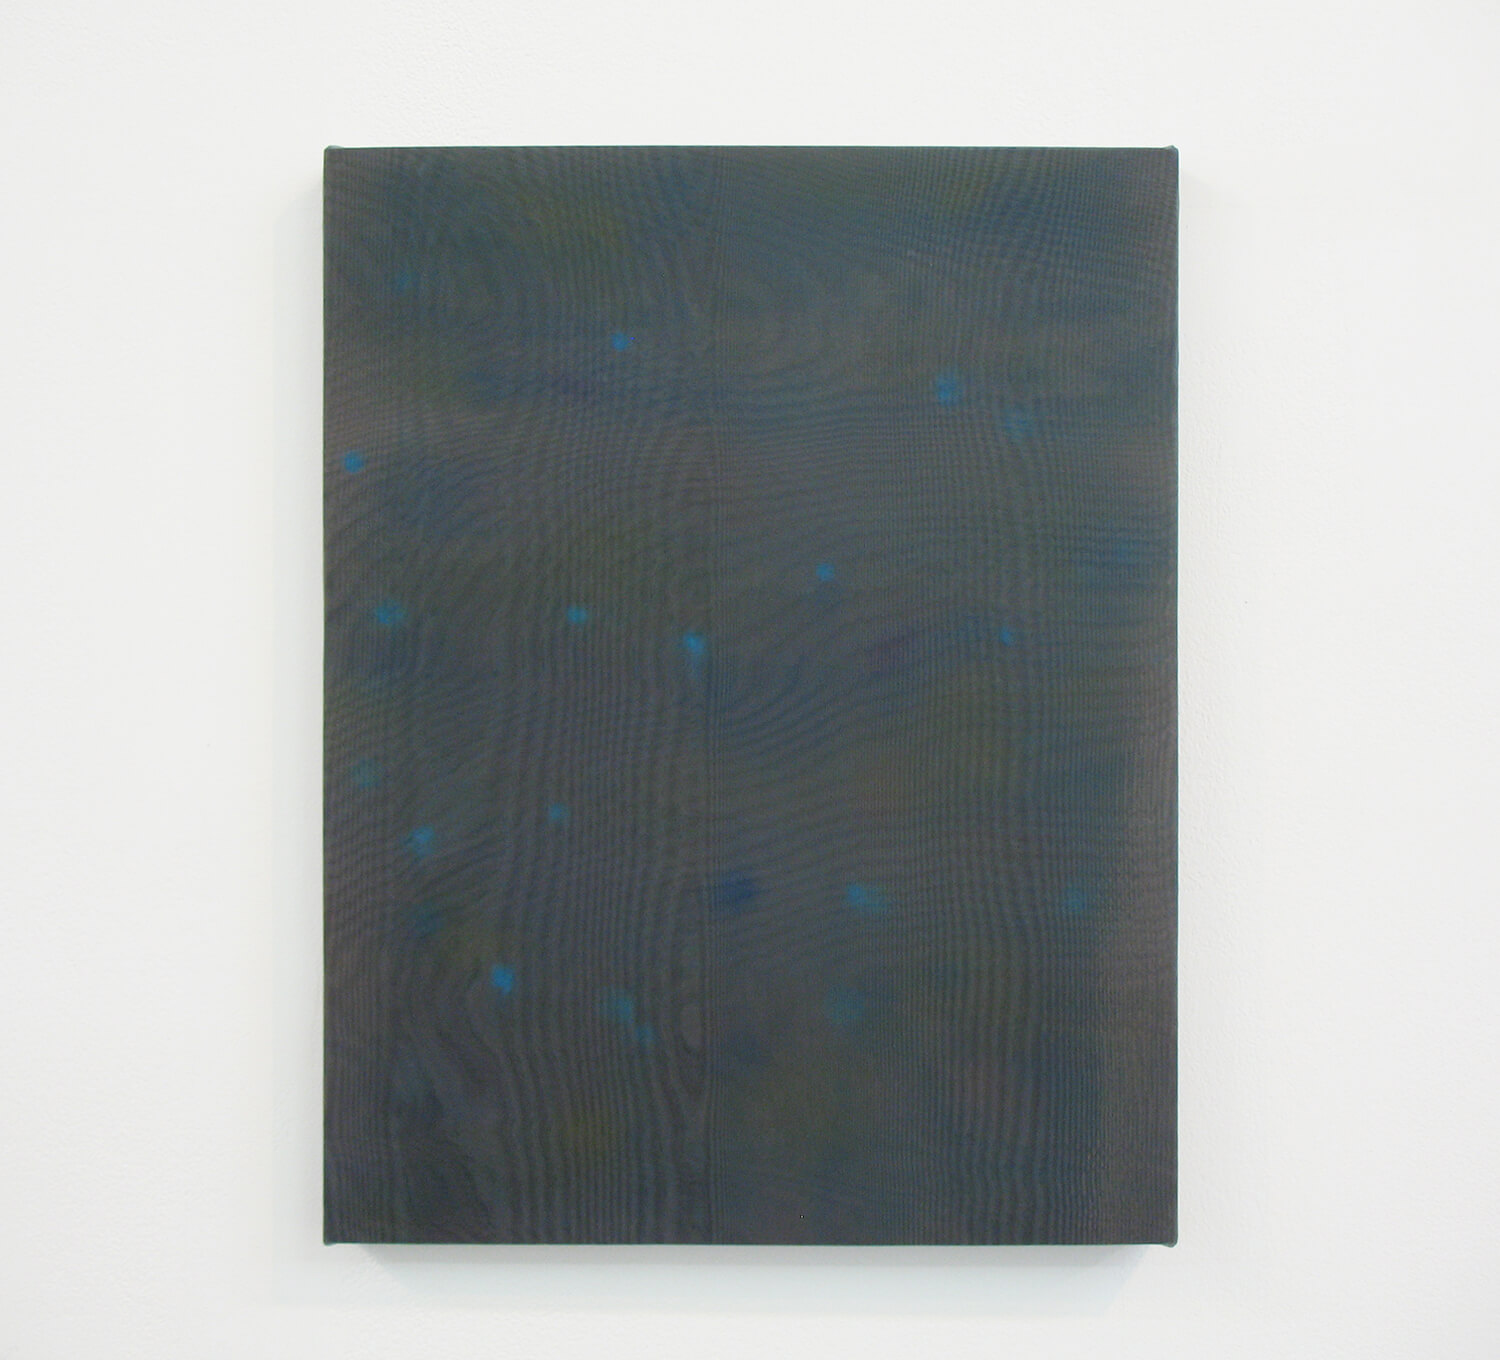 drops #6<br>
Acrylic, glass organdy, cotton, panel 41 x 33 cm 2013